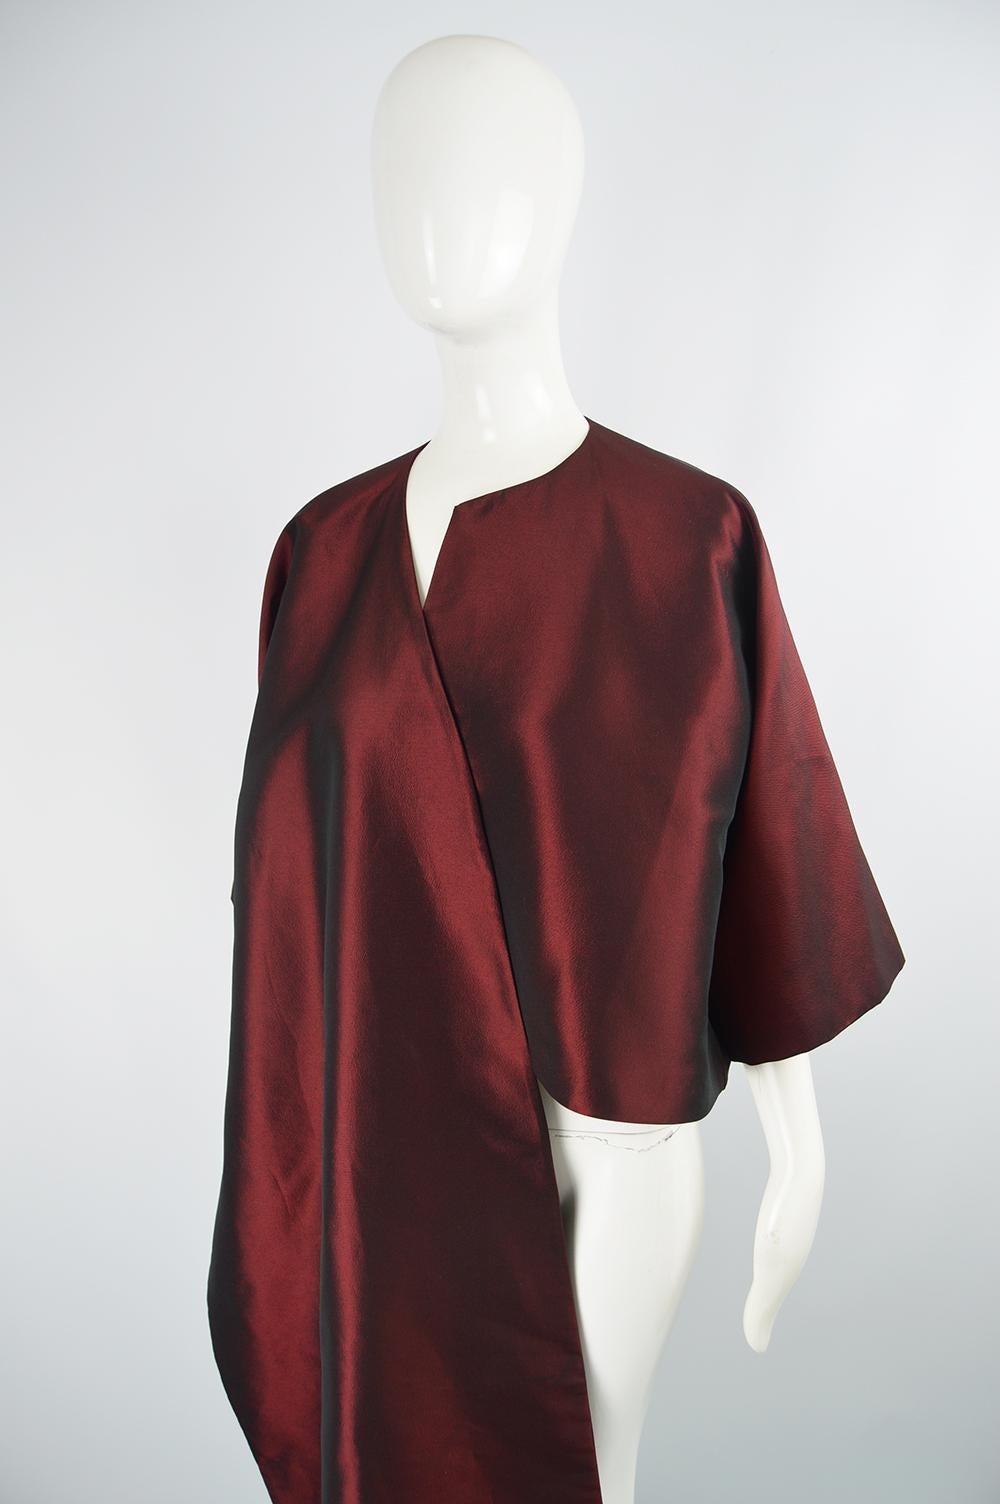 Gianfranco Ferré Vintage Architectural Red Taffeta Evening Jacket, c. 1990s Damen